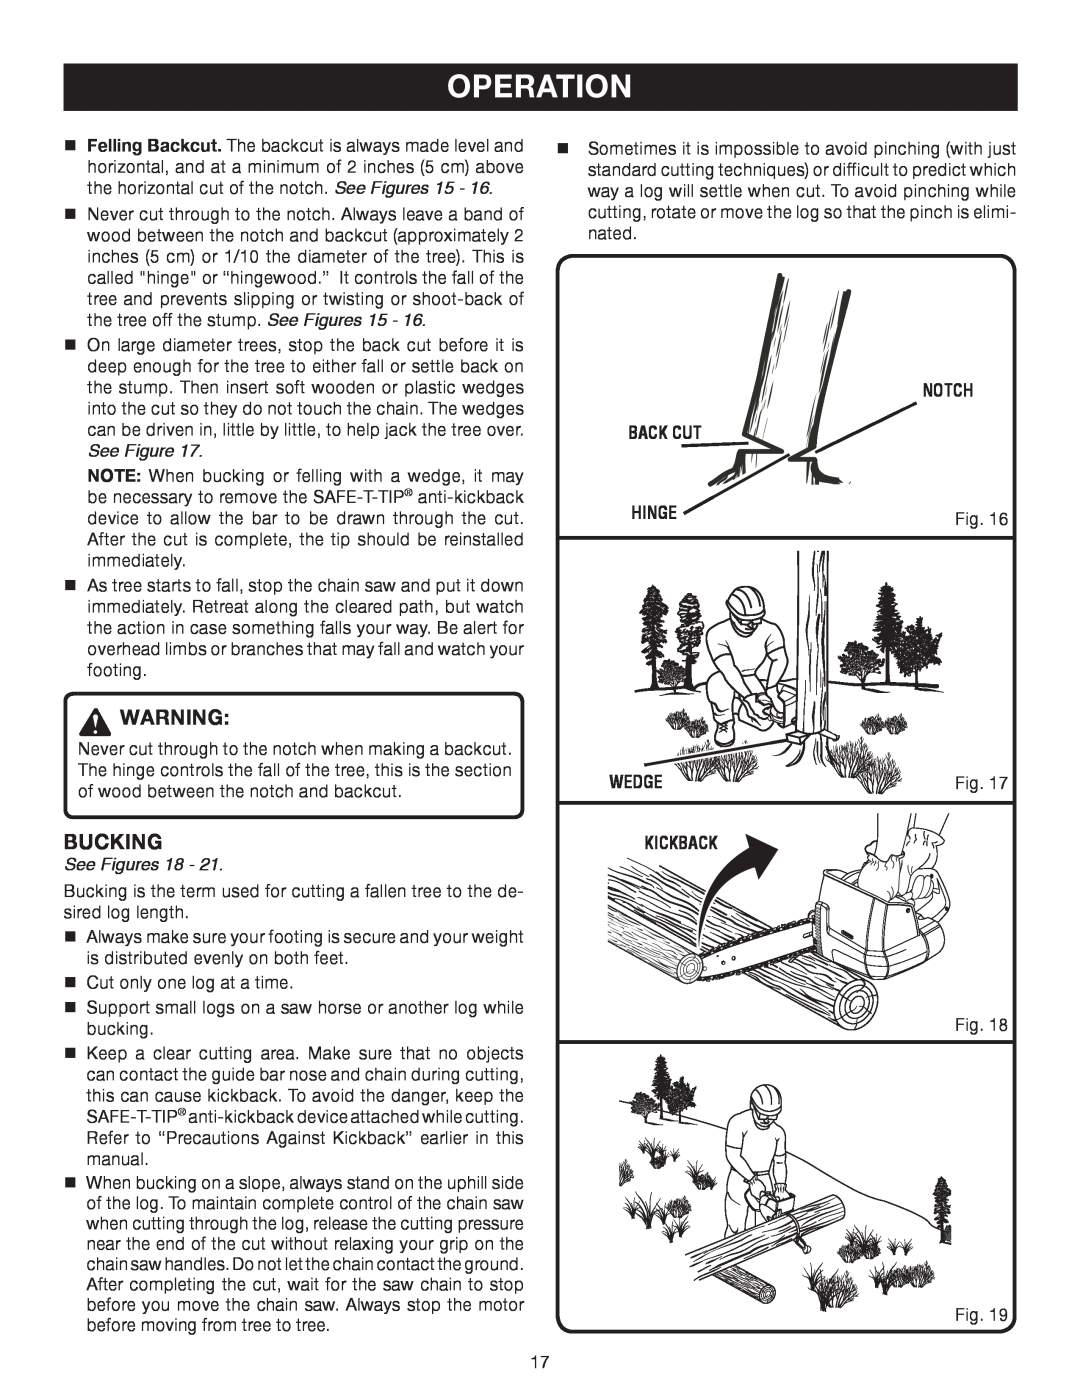 Ryobi Outdoor P540 manual Bucking, Operation, See Figures 18, Notch Back Cut, Hinge, Wedge, Kickback 